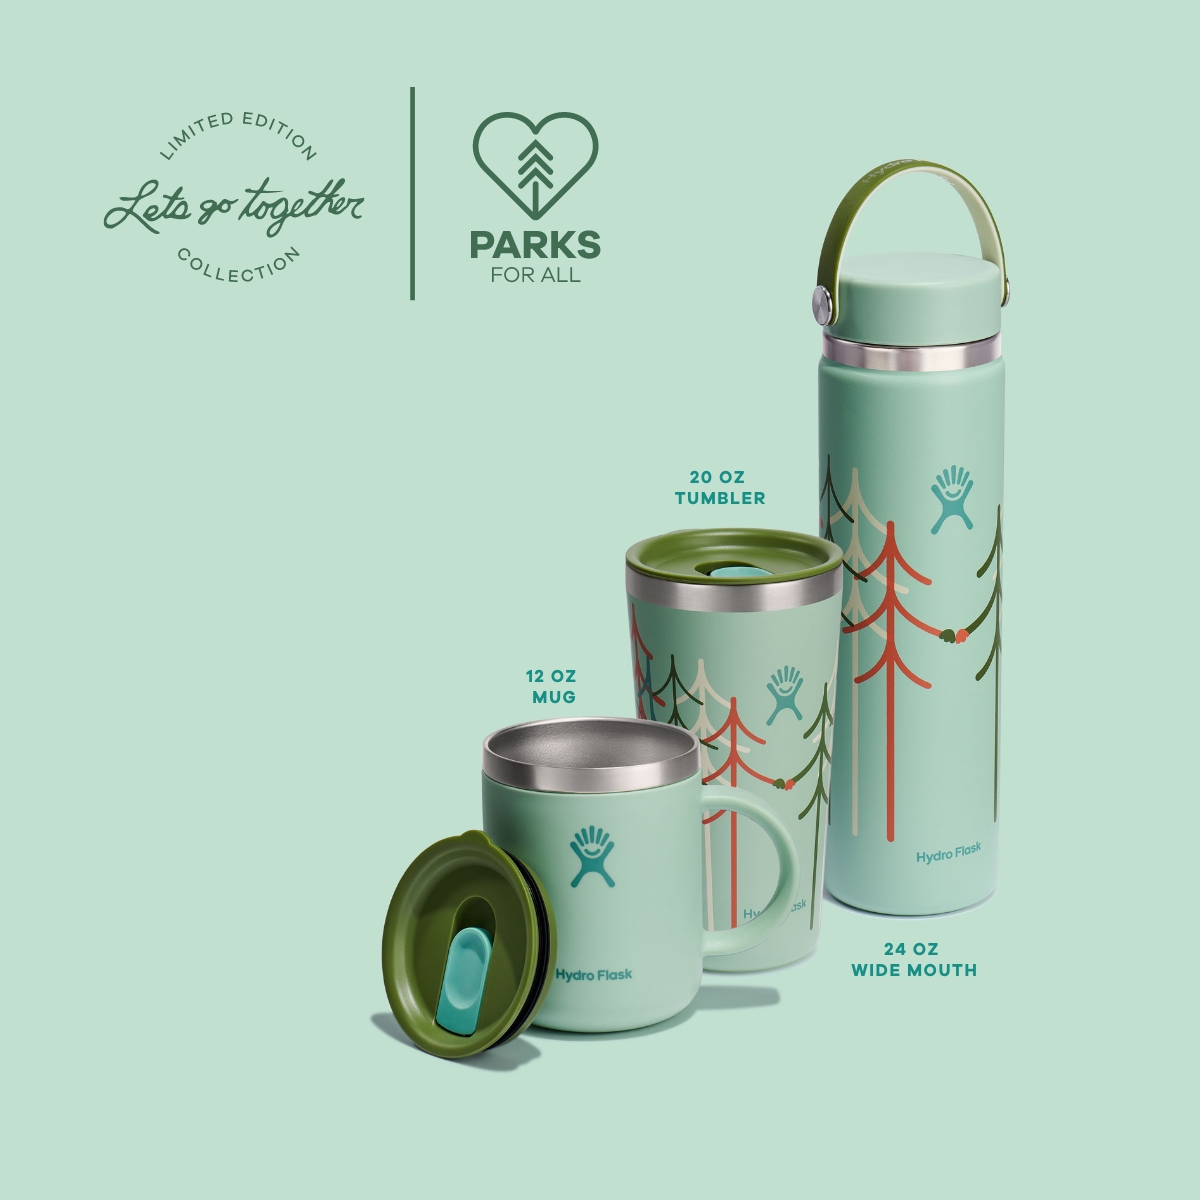 Hydro Flask Mugs #HeyLetsGo #HydroFlask 